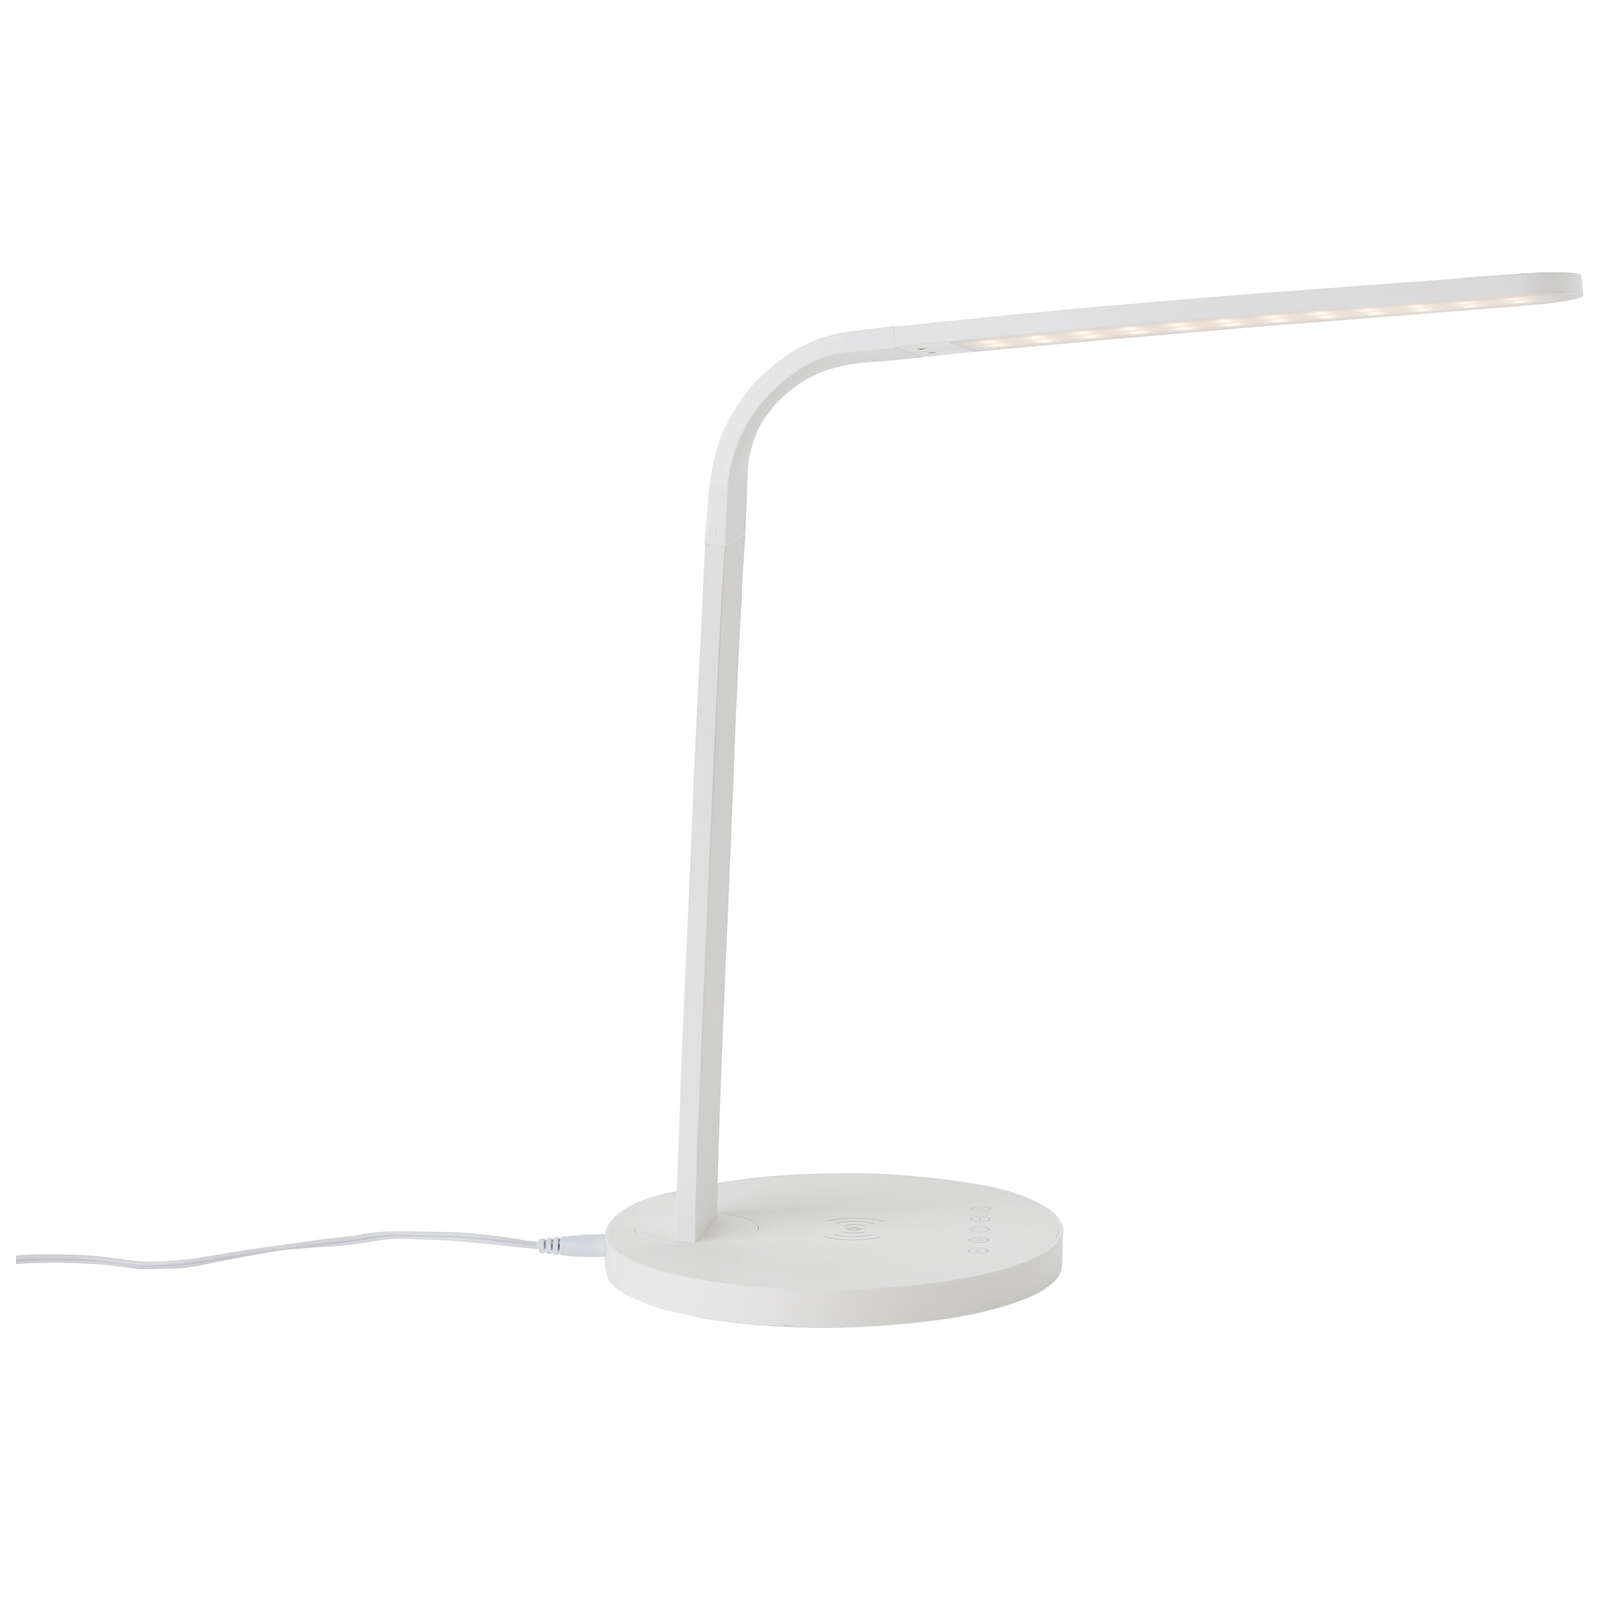             Plastic table lamp - Jannes - White
        